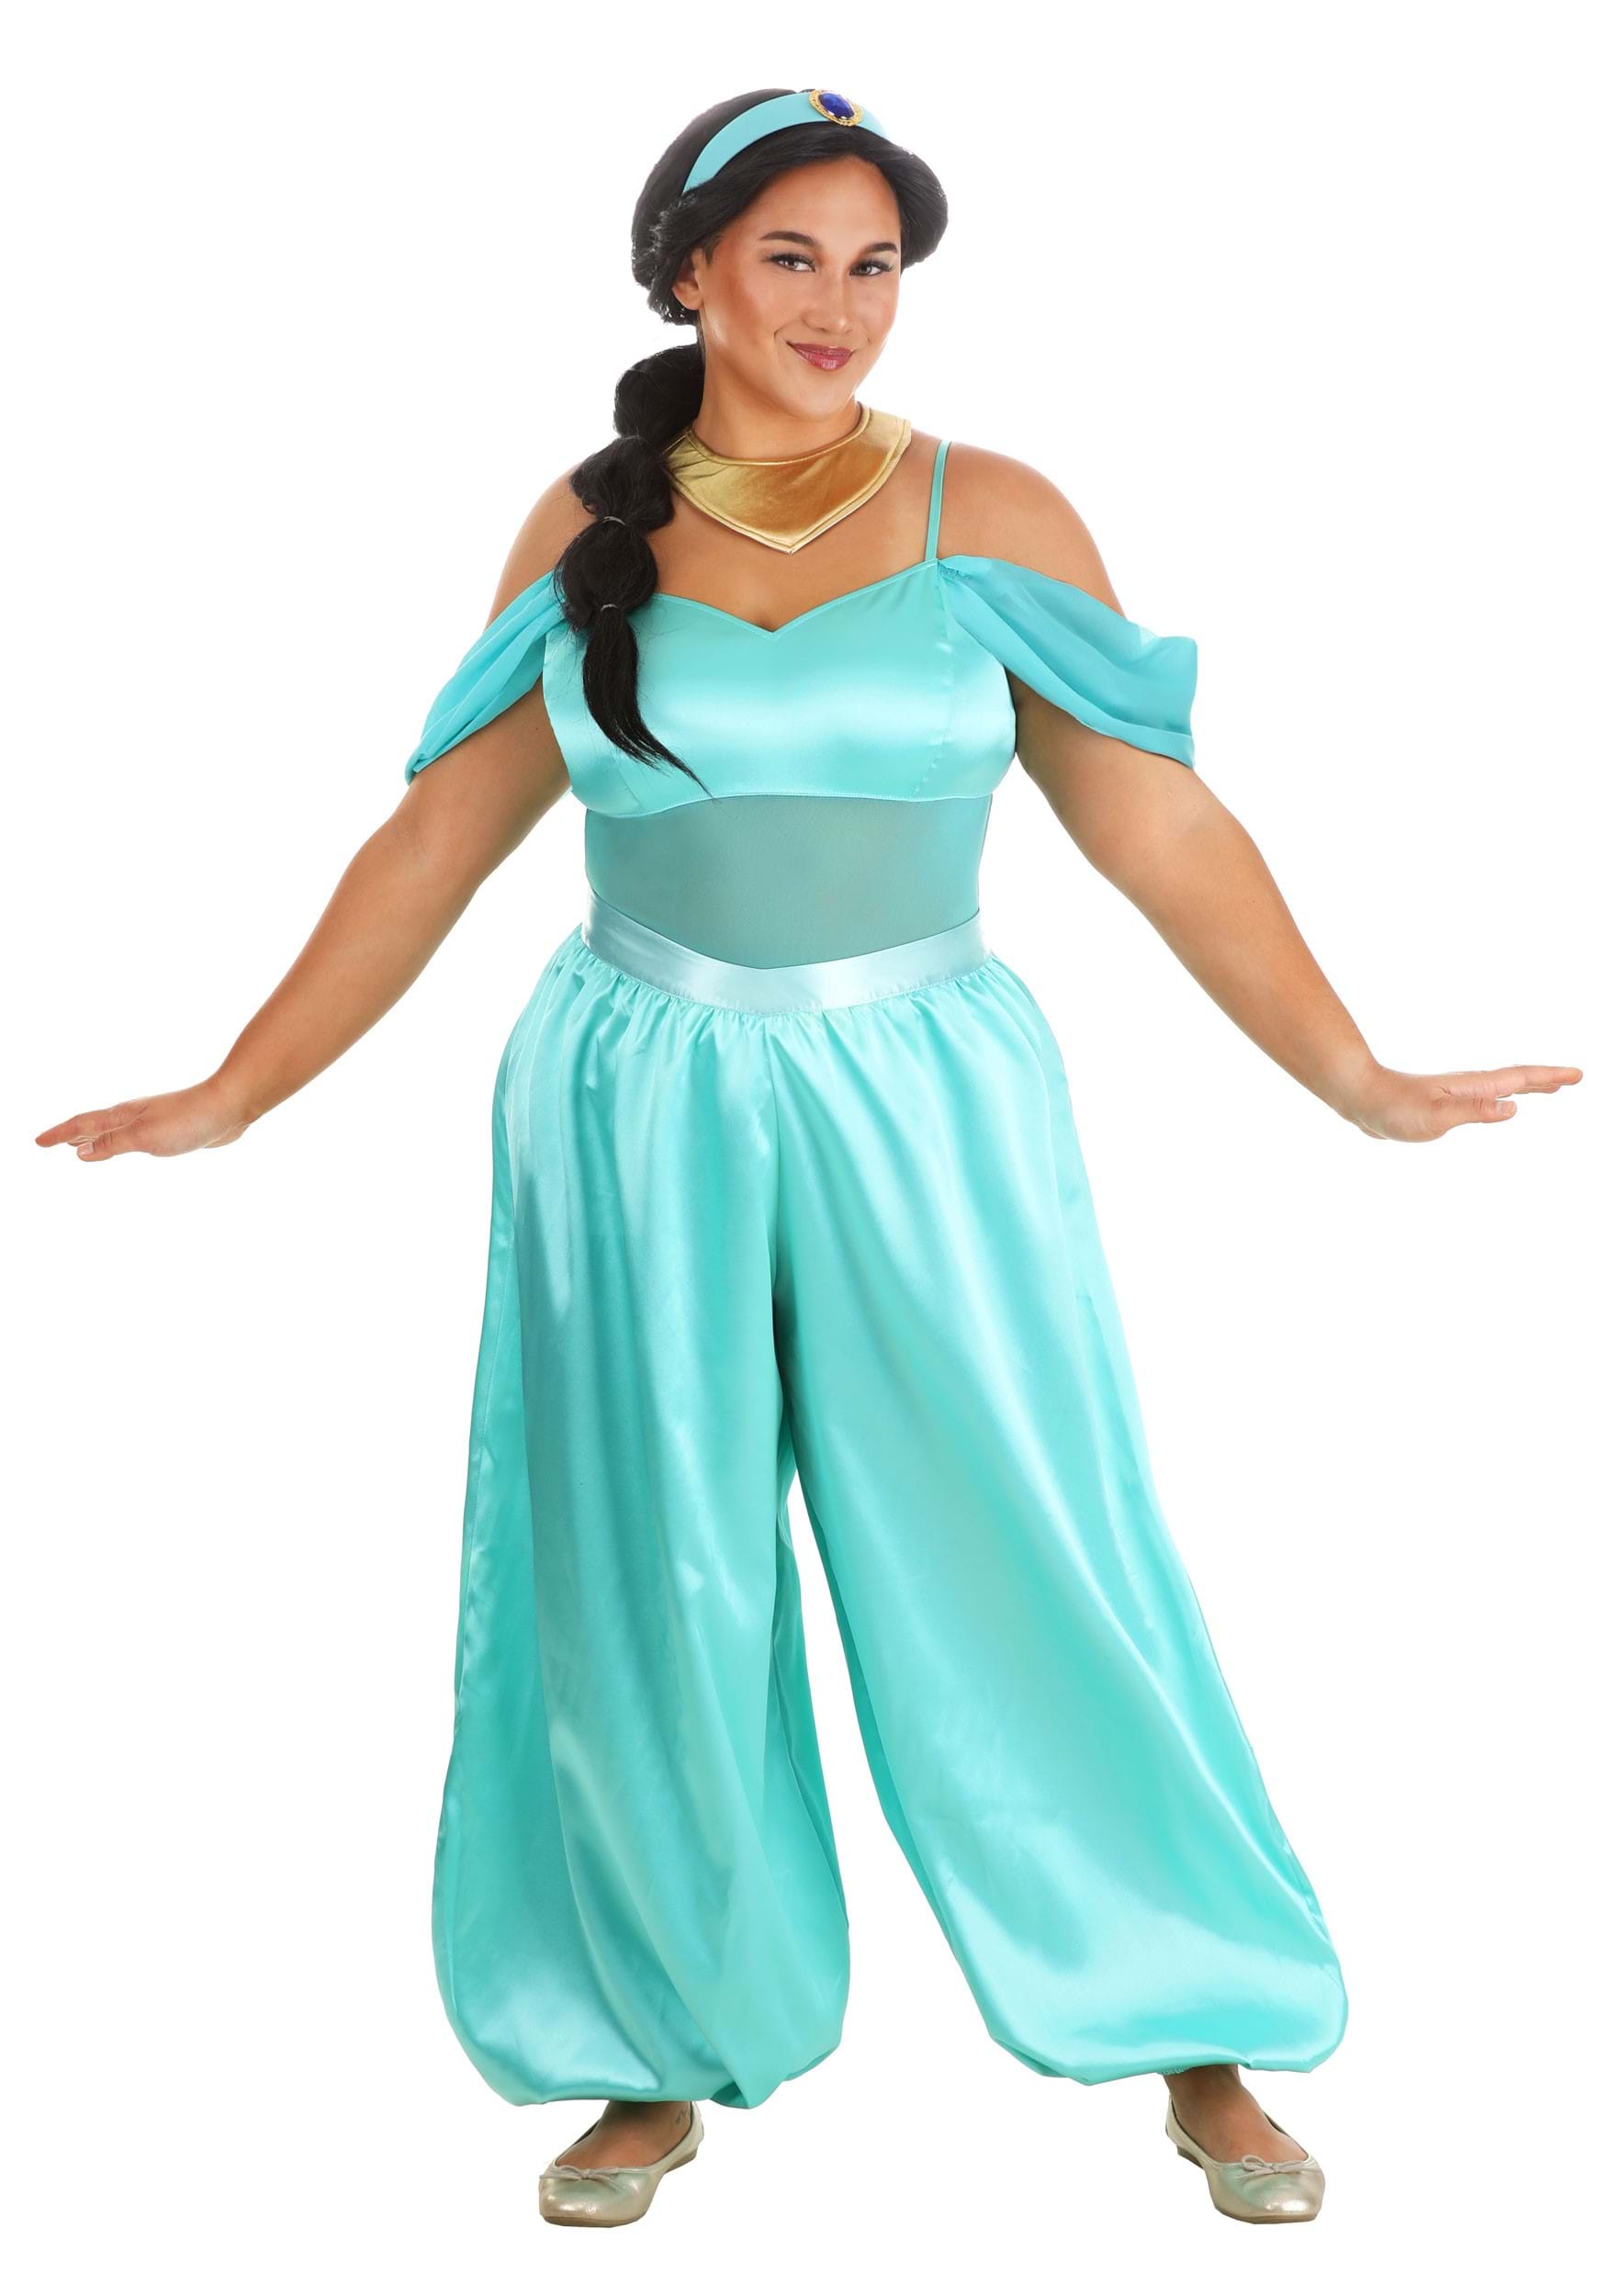 Disney Aladdin Plus Size Jasmine Costume for Women